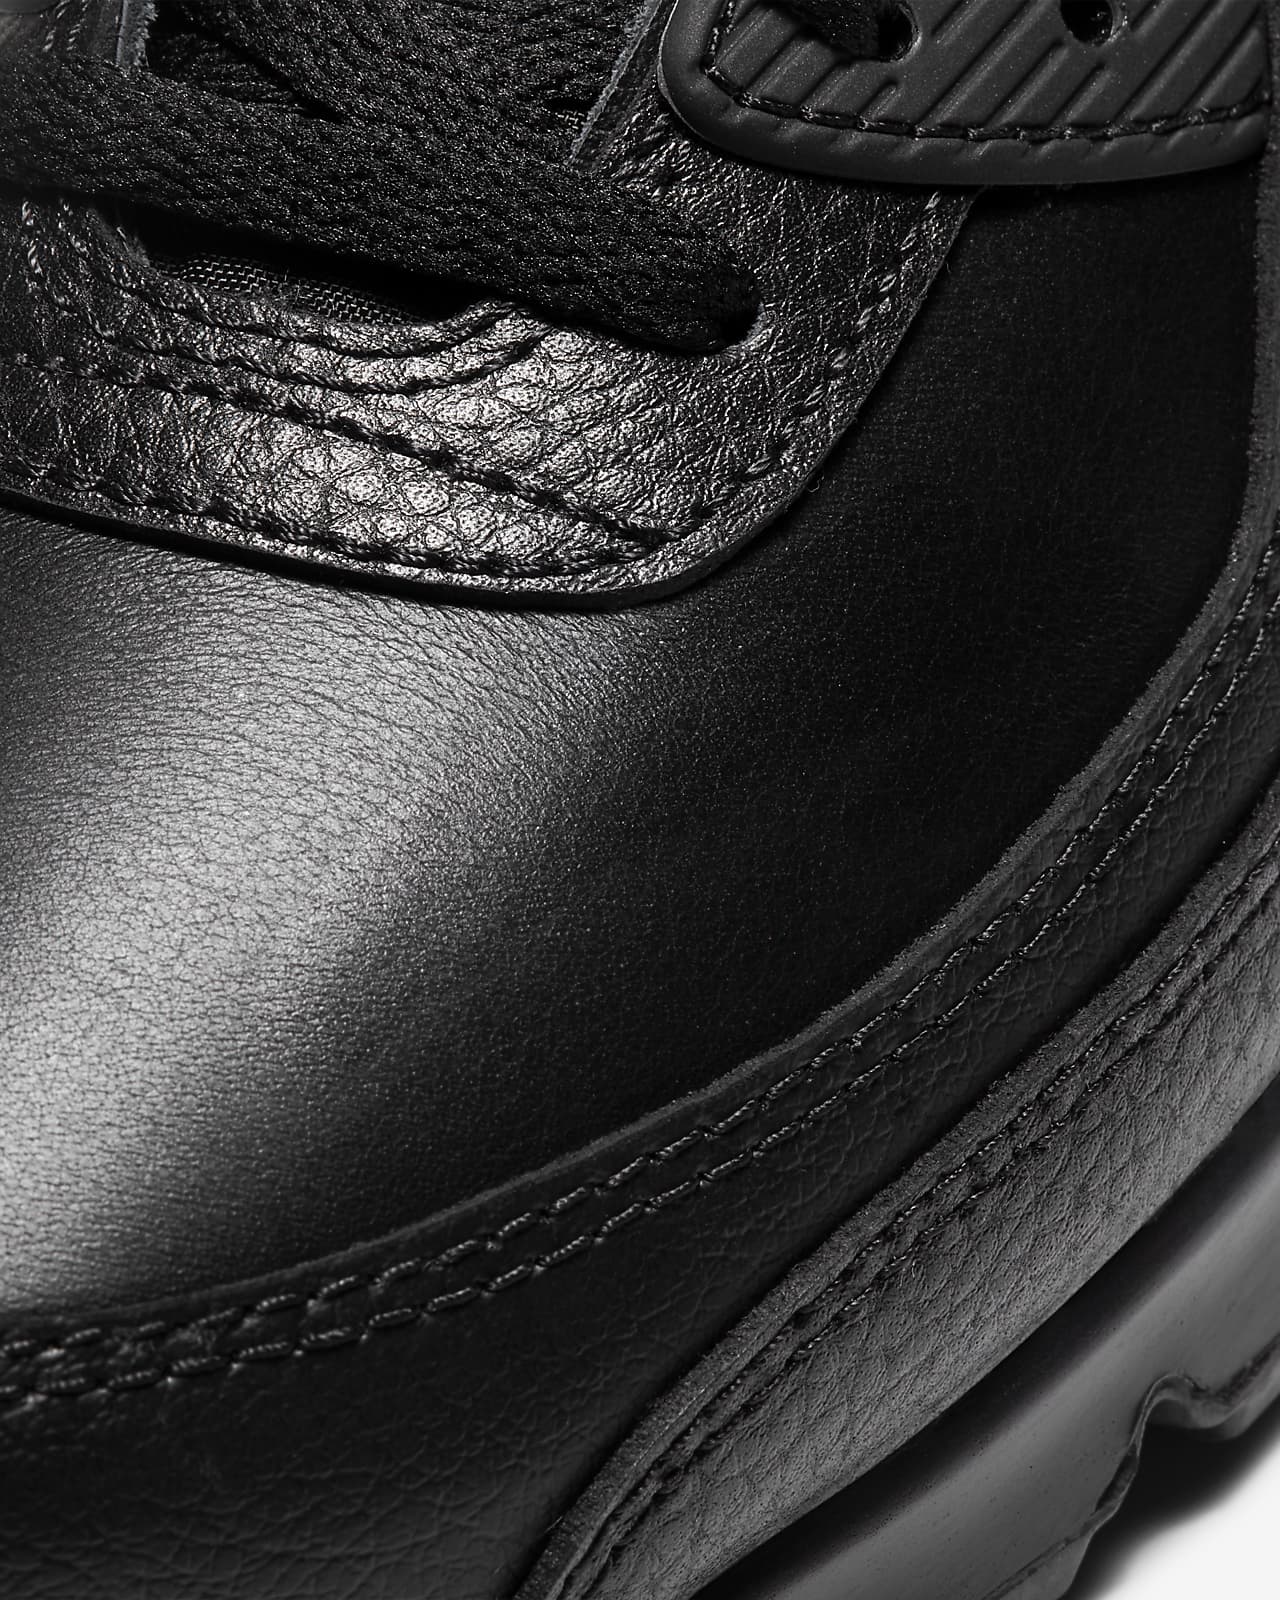 collar Federal Idear Air Max 90 LTR Zapatillas - Hombre. Nike ES